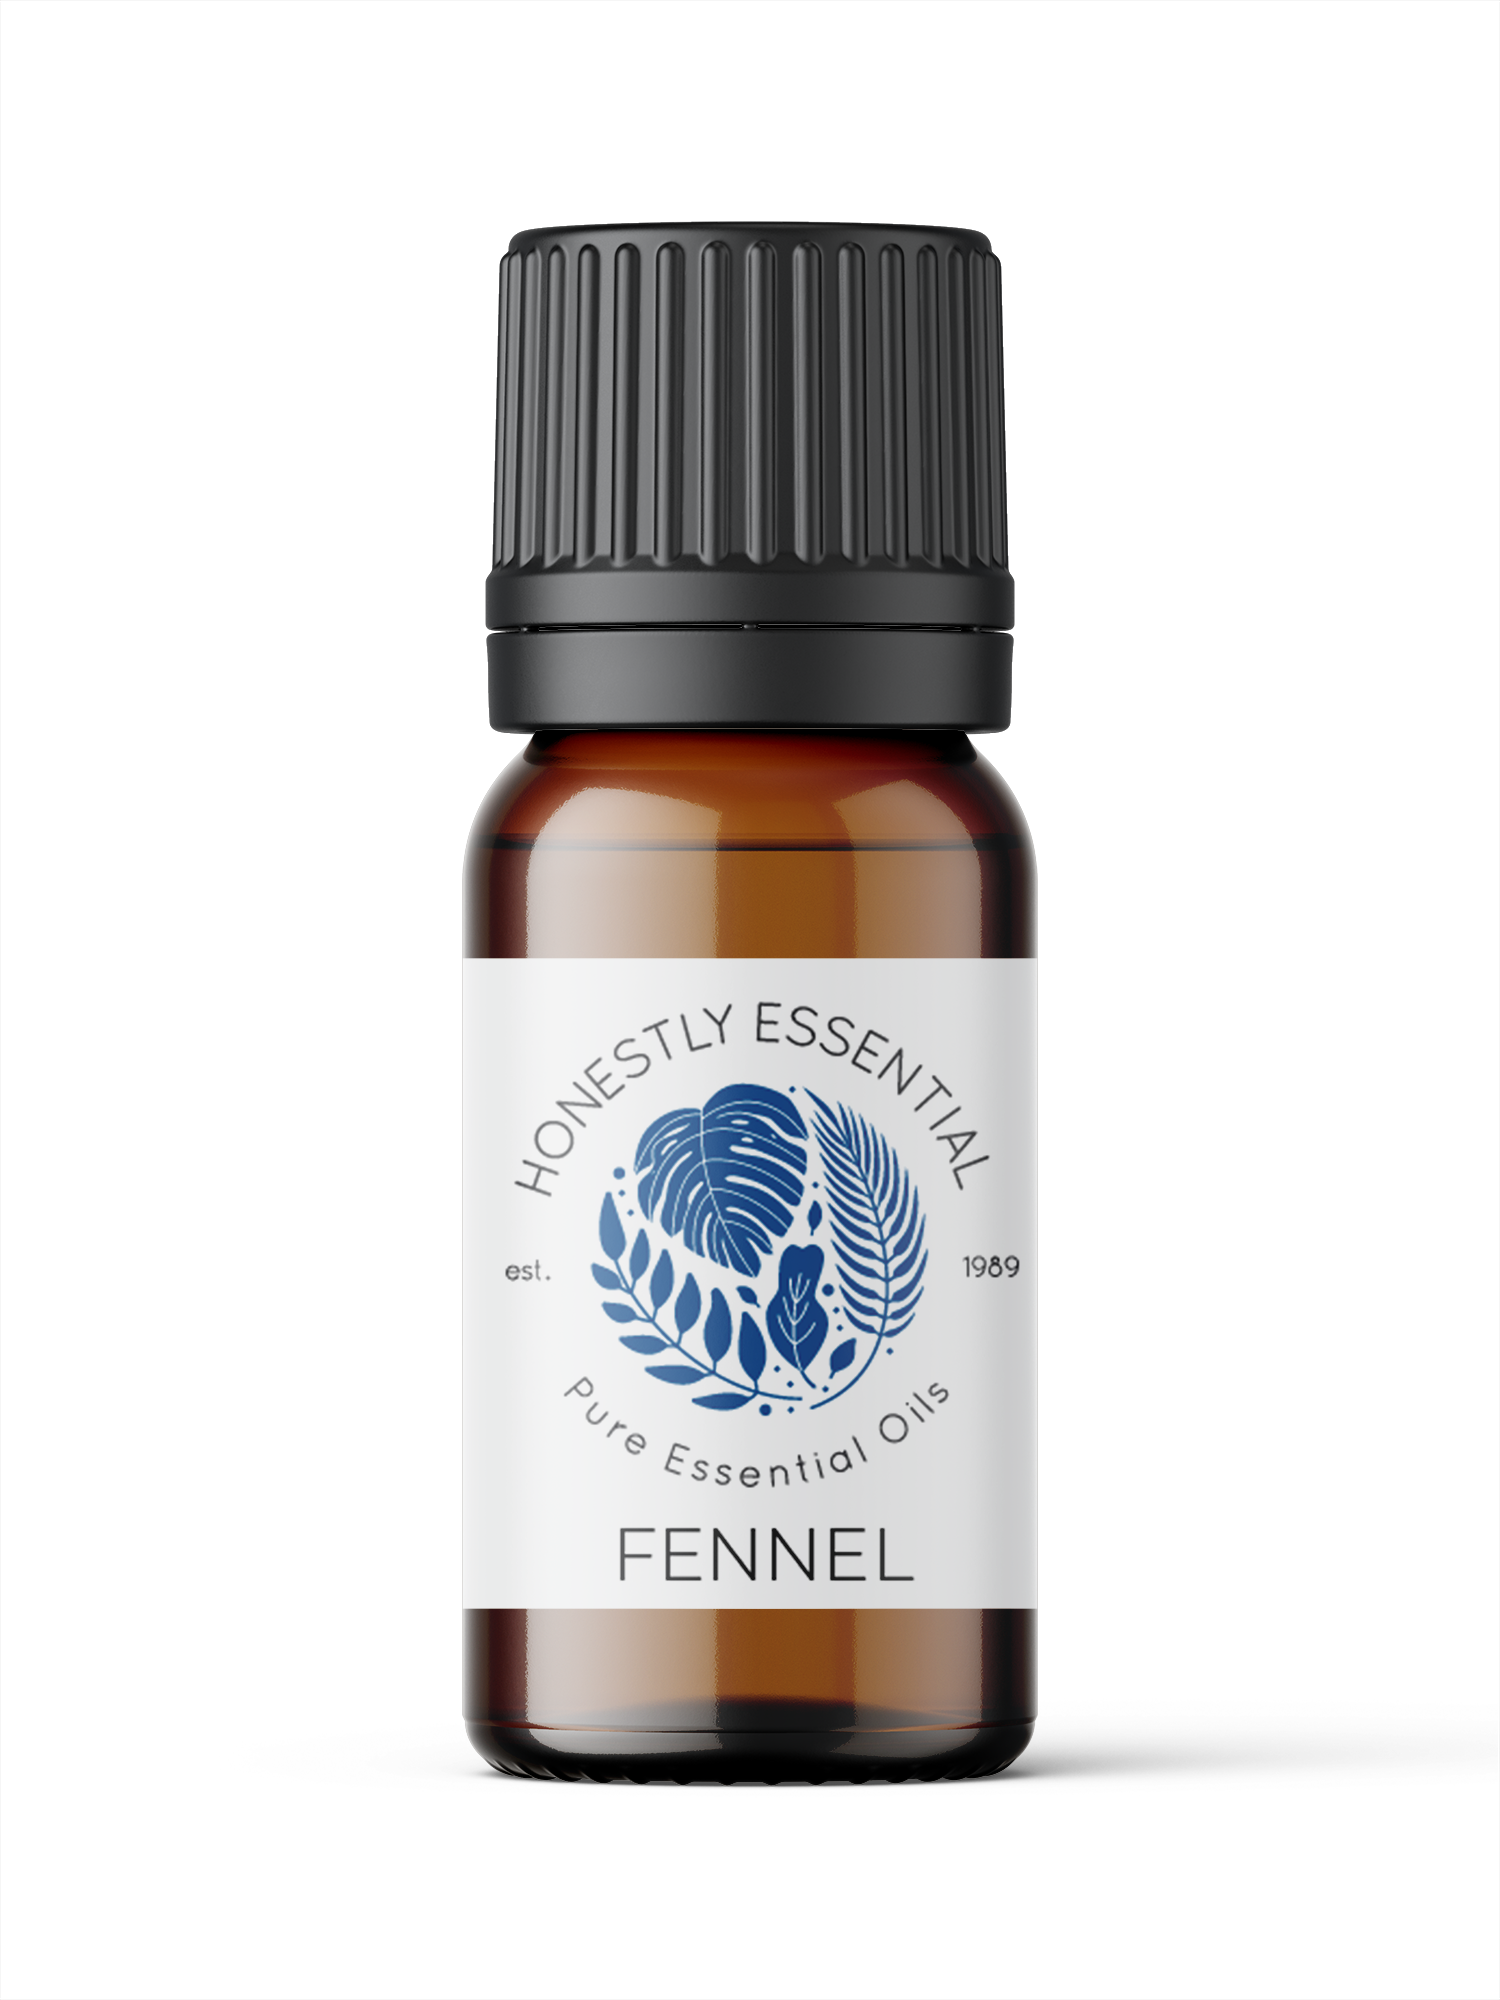 Fennel Essential Oil - Essential Oils | Honestly Essential Oils digestion, herb, herb essential oil, herbs, seed, seed essential oils, seeds